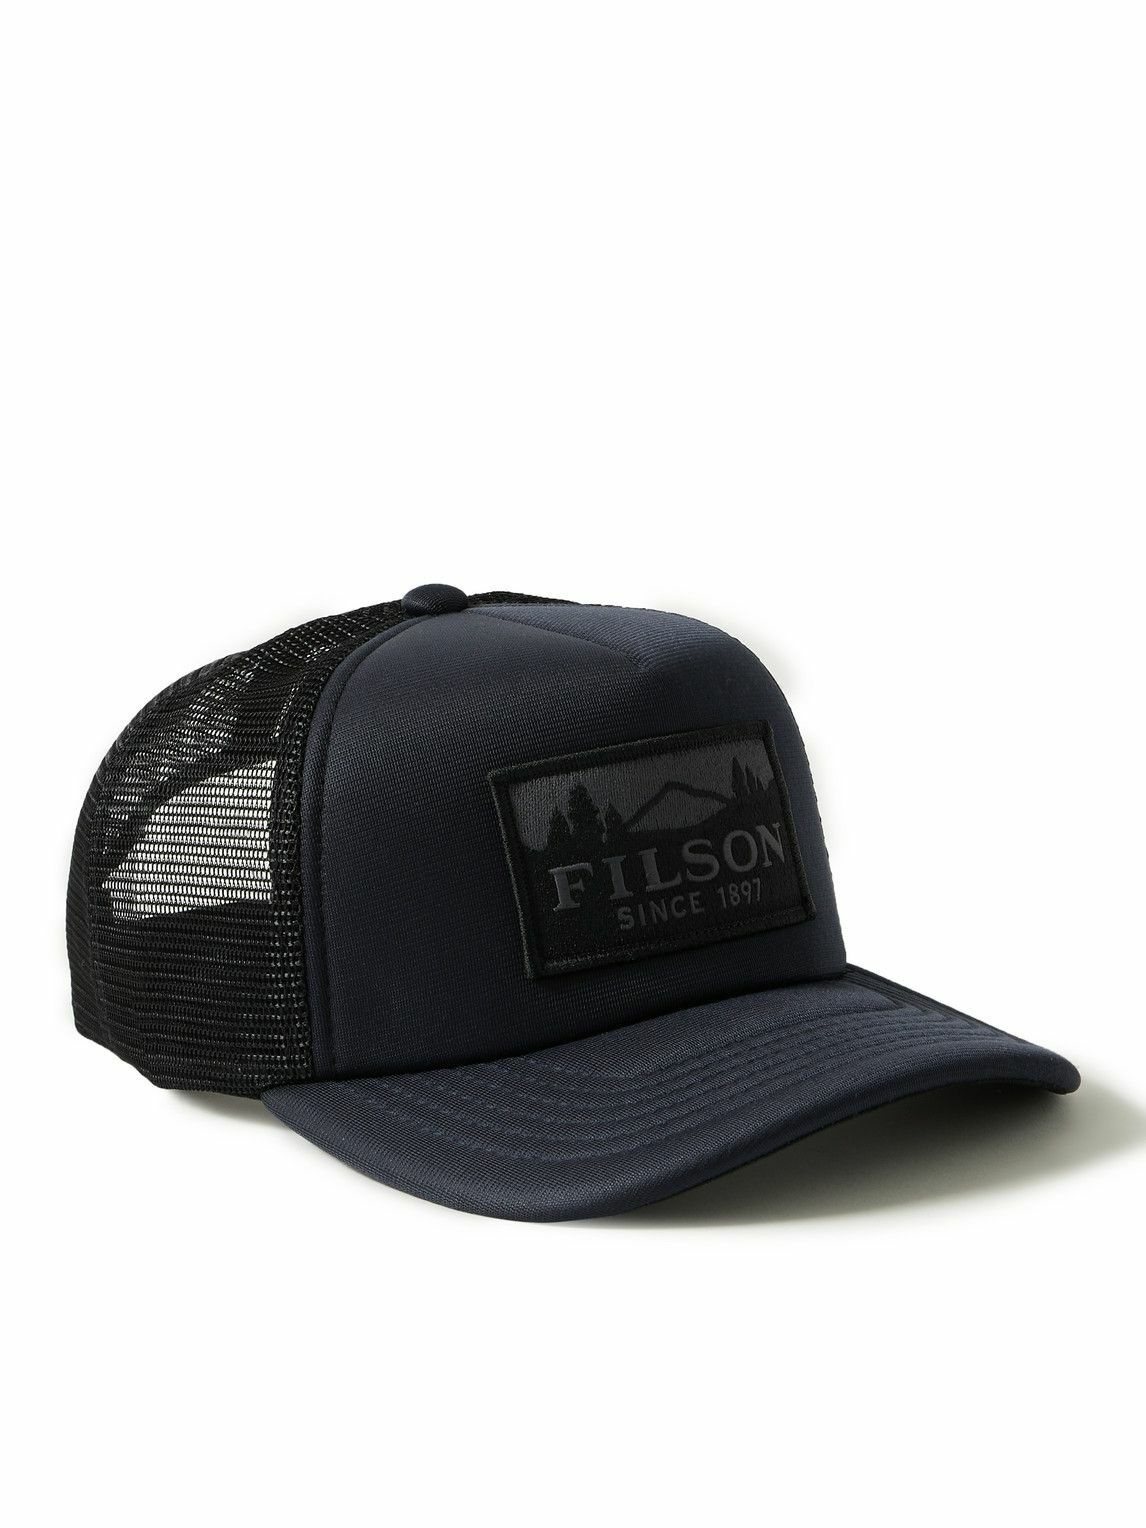 Photo: Filson - Harvester Logo-Appliquéd Twill and Mesh Trucker Cap